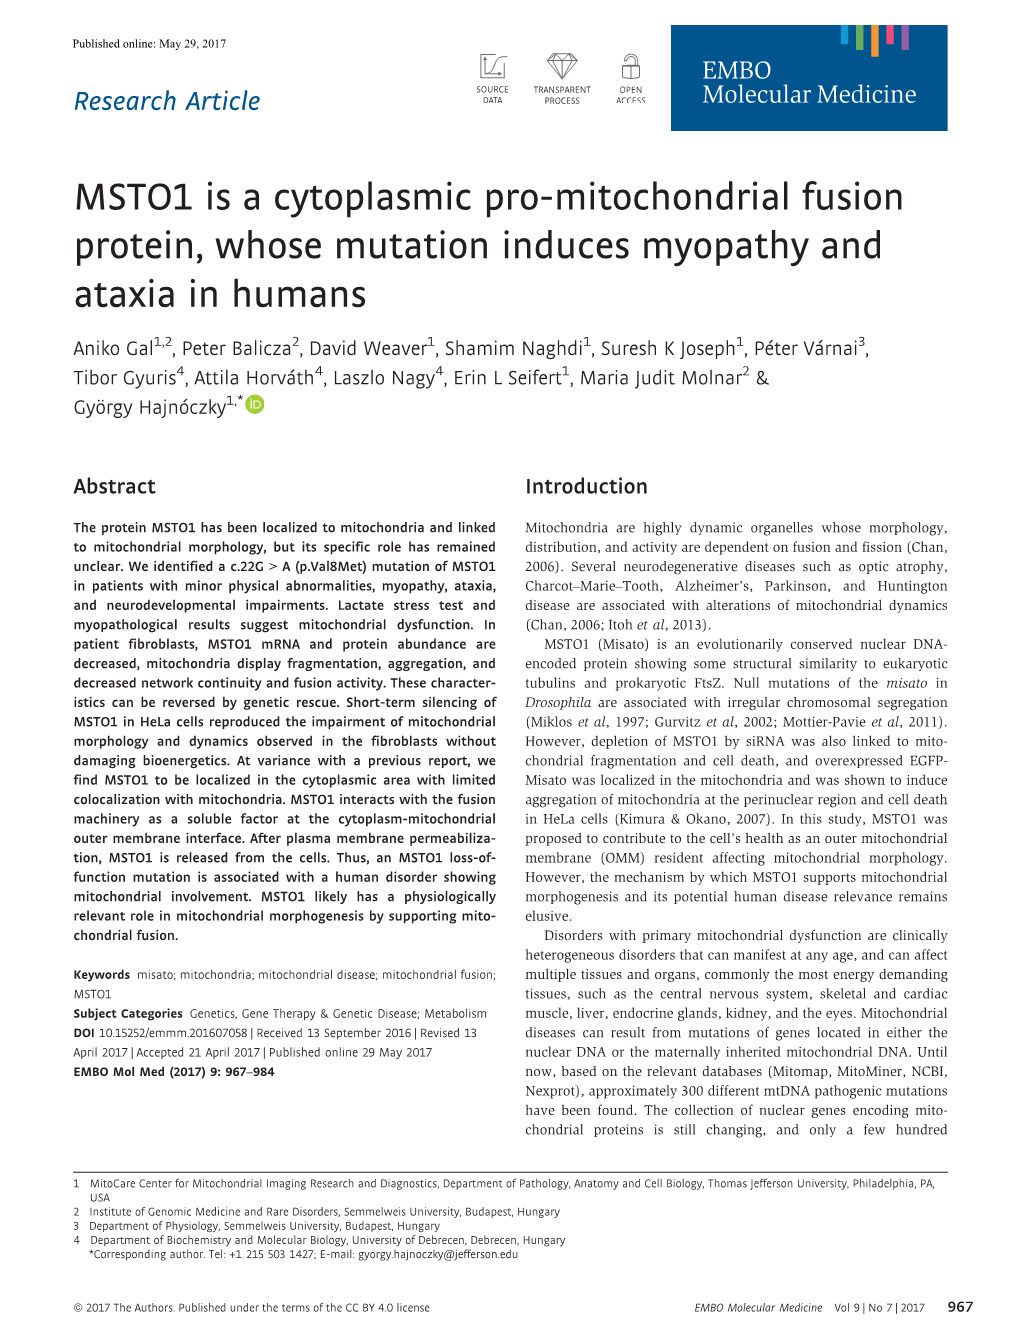 MSTO1 Is a Cytoplasmic Pro&#X2010;Mitochondrial